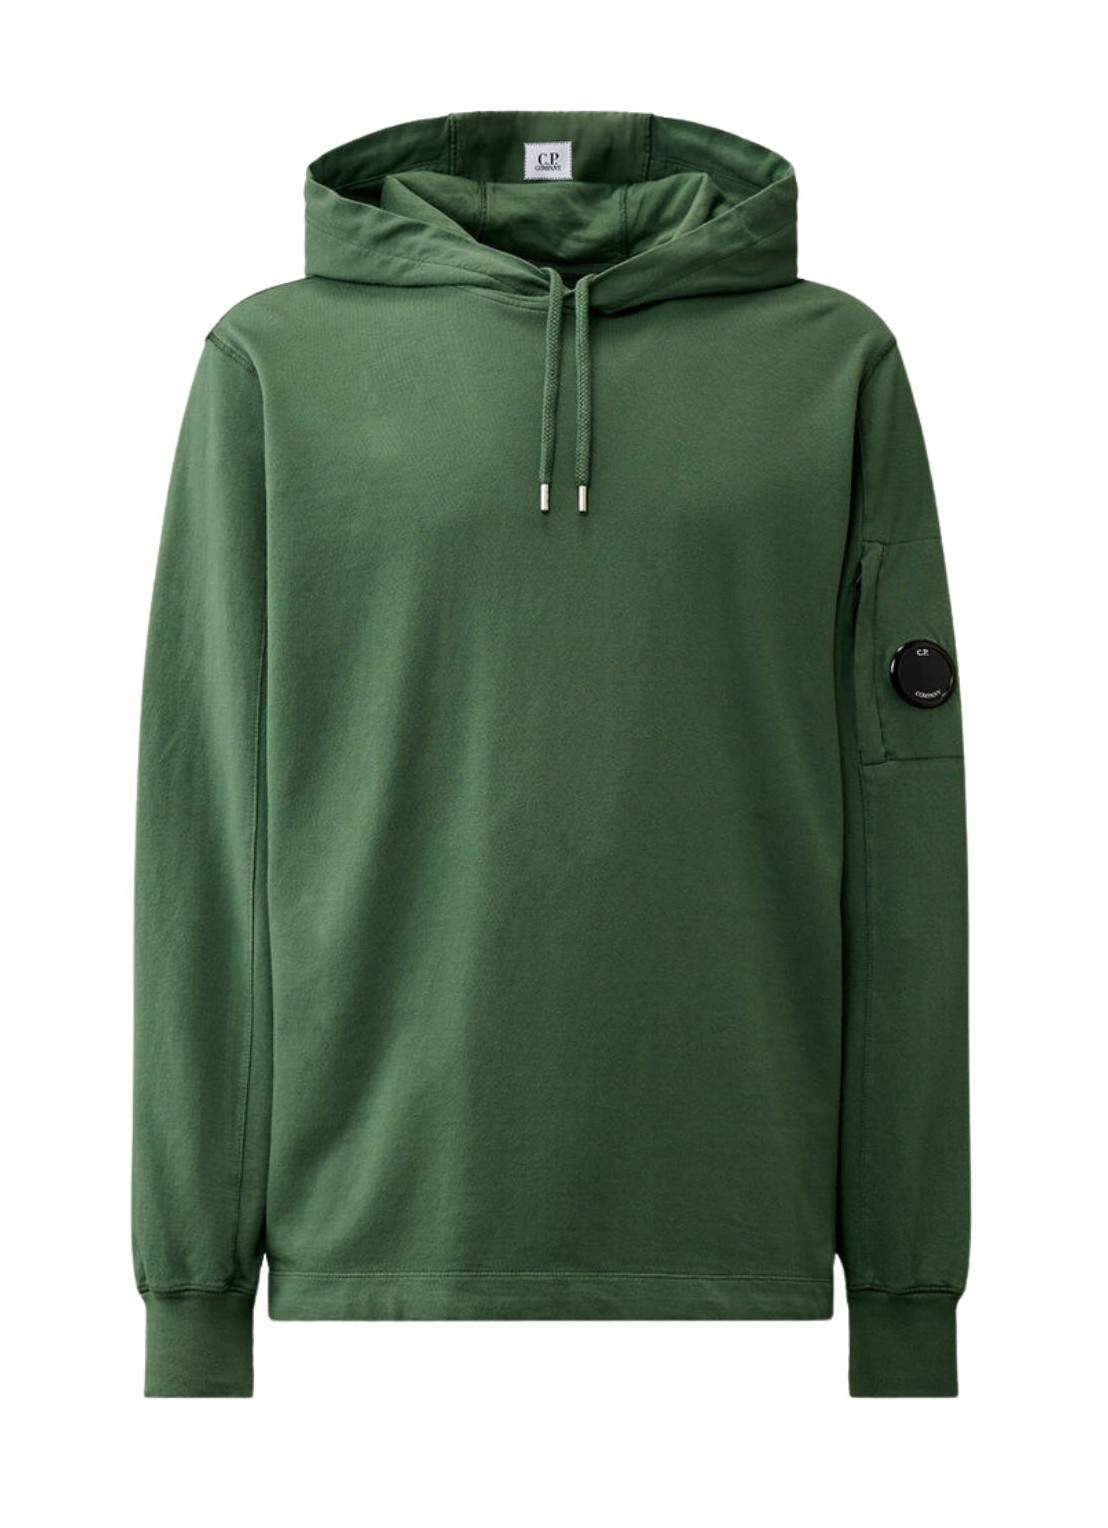 Sudadera c.p.company sweater man light fleece hoodie 16cmss033a002246g 649 talla XL
 